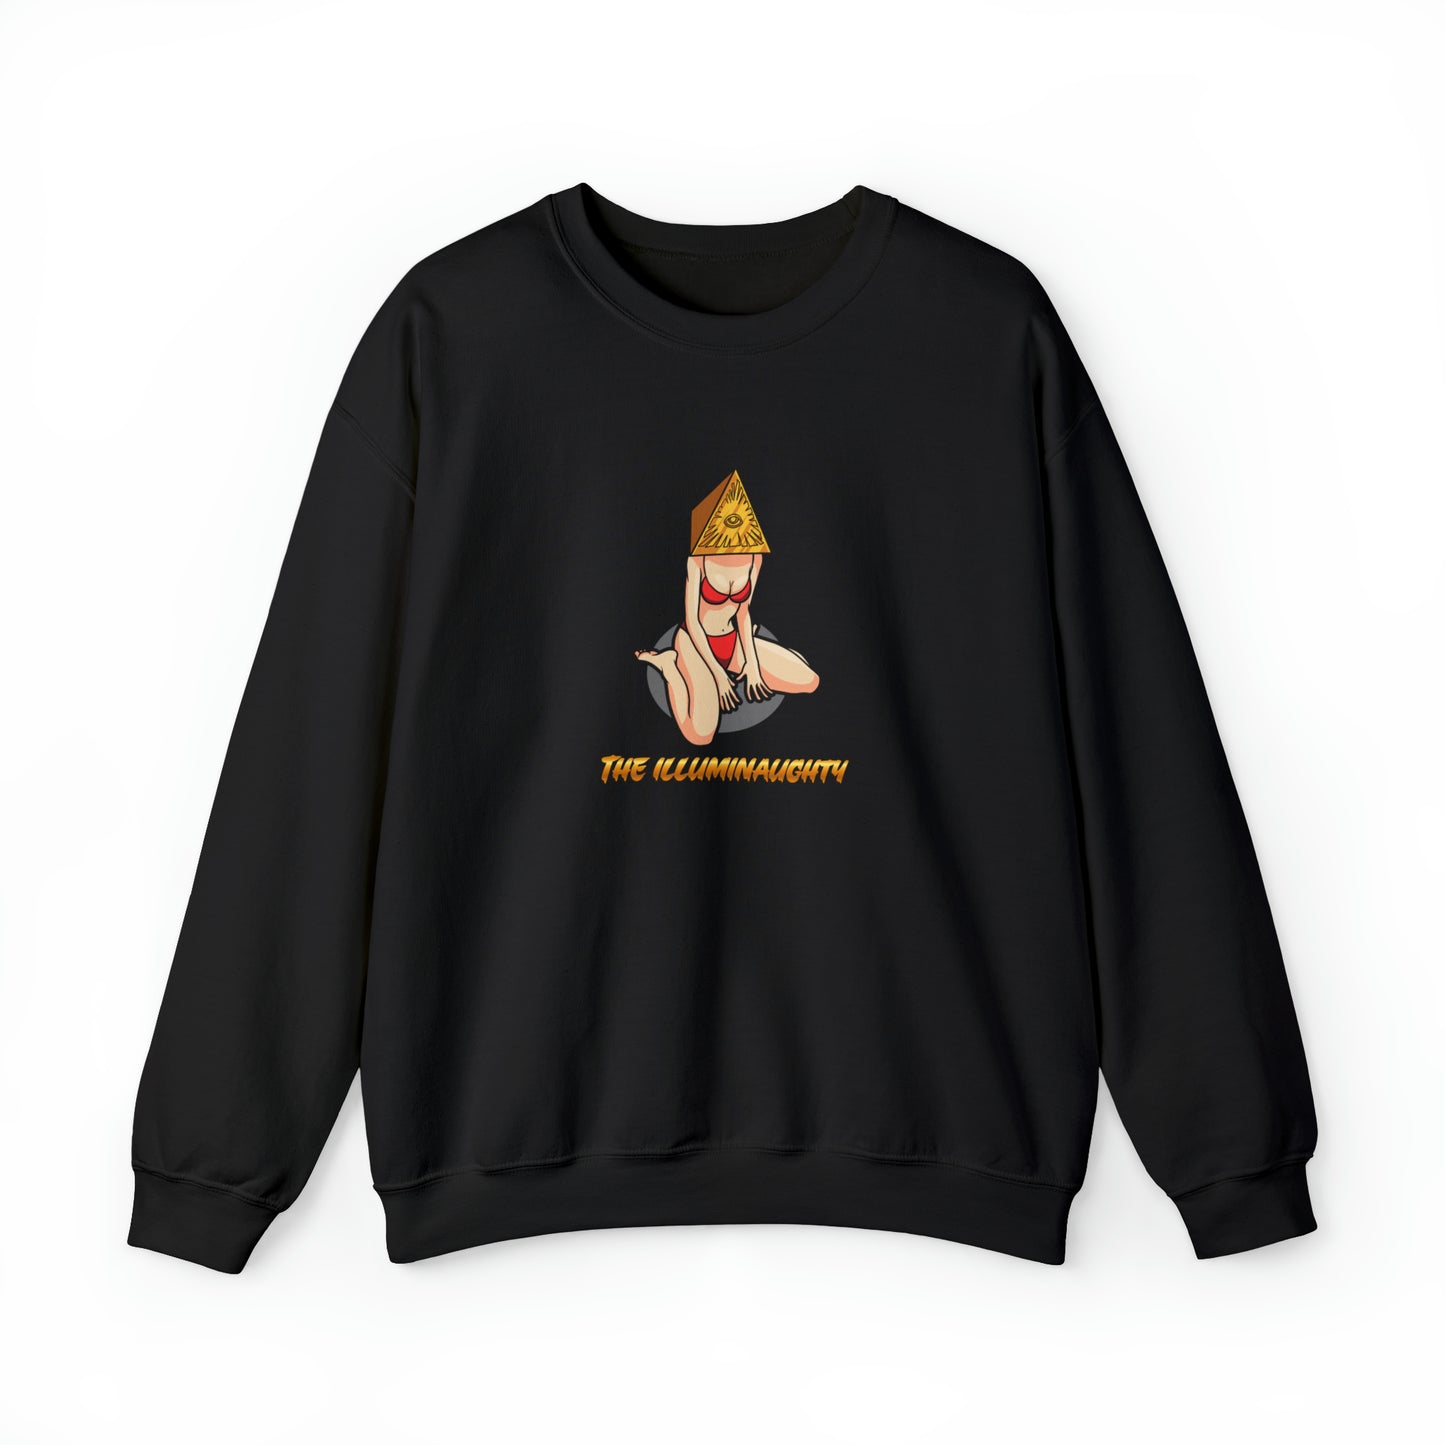 Custom Parody Crewneck Sweatshirt, The Illuminaughty Design